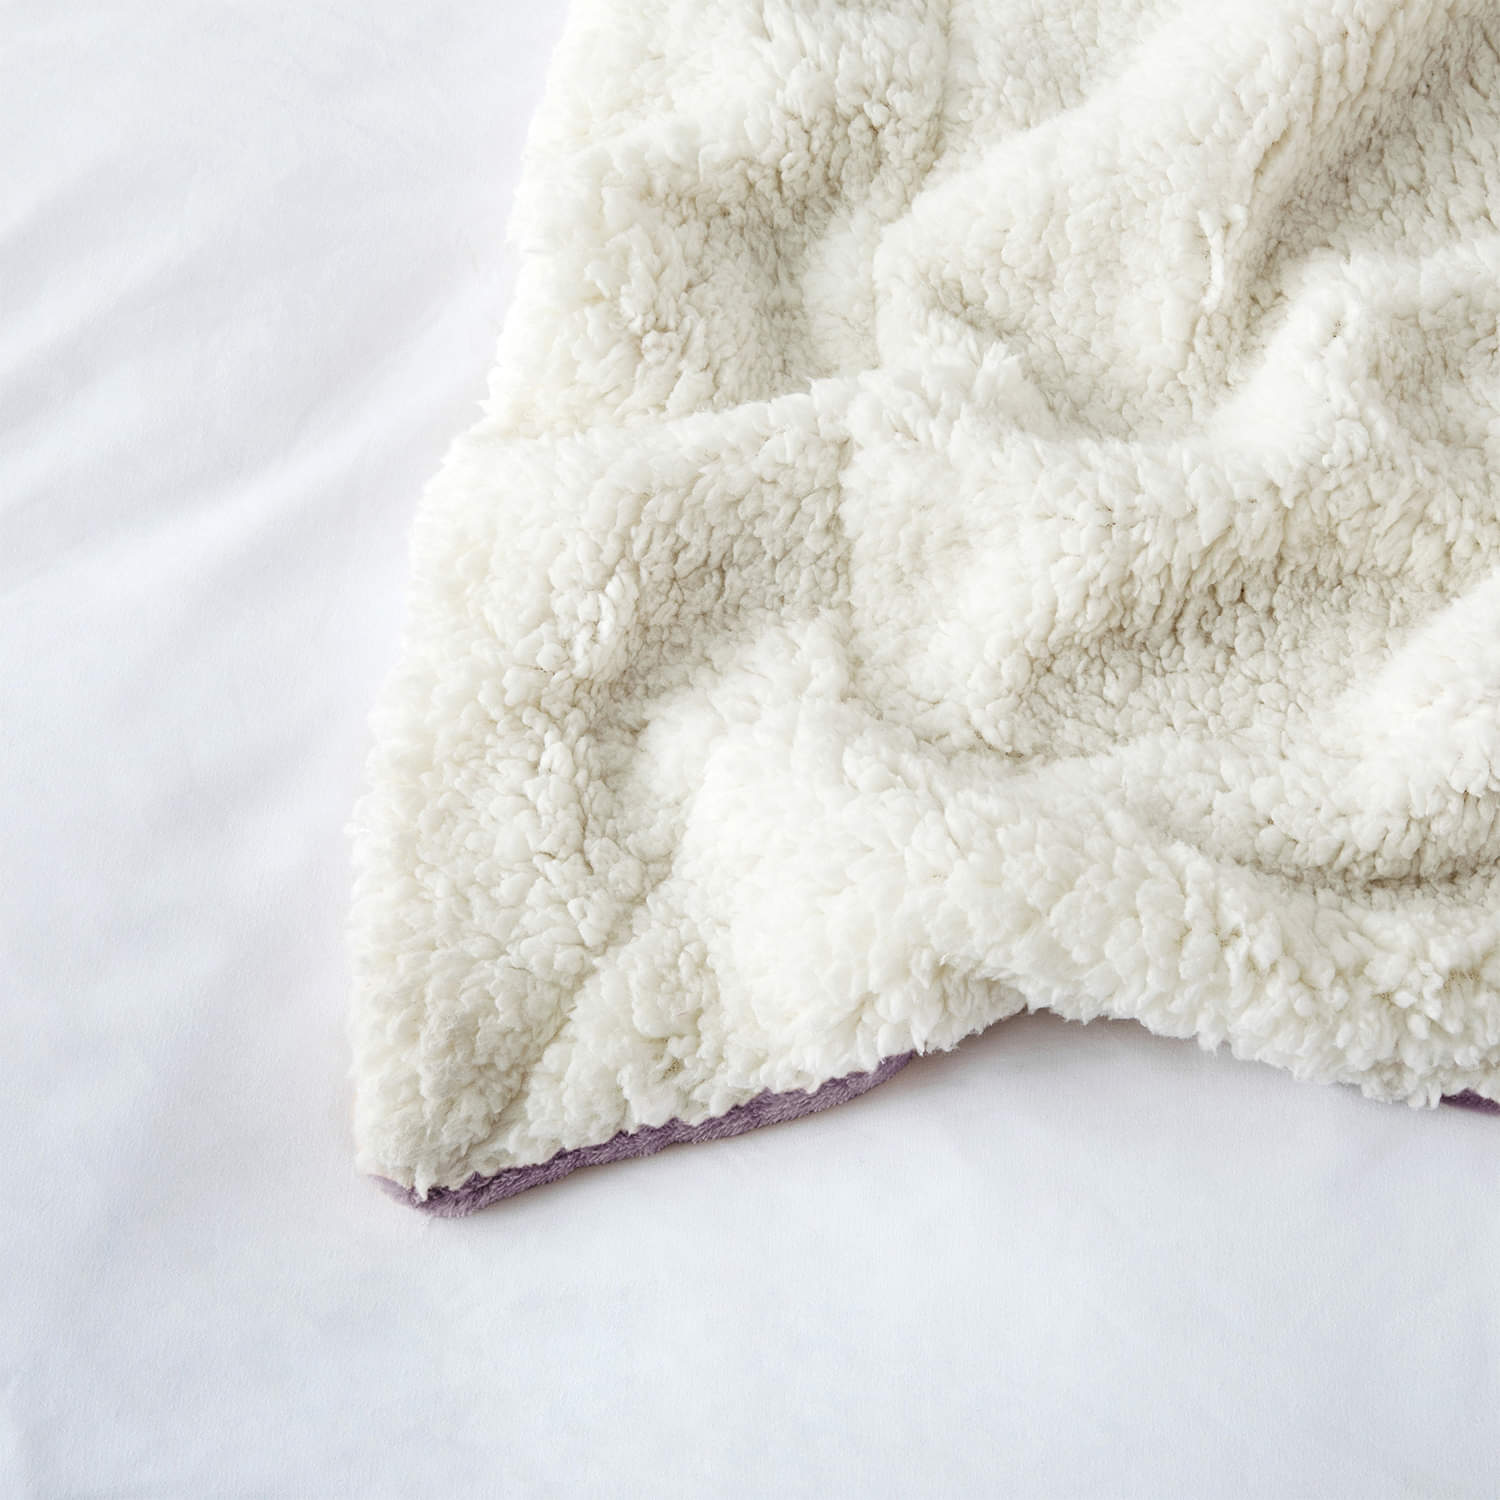 Ultra Soft Sherpa Throw Blanket - Lavender